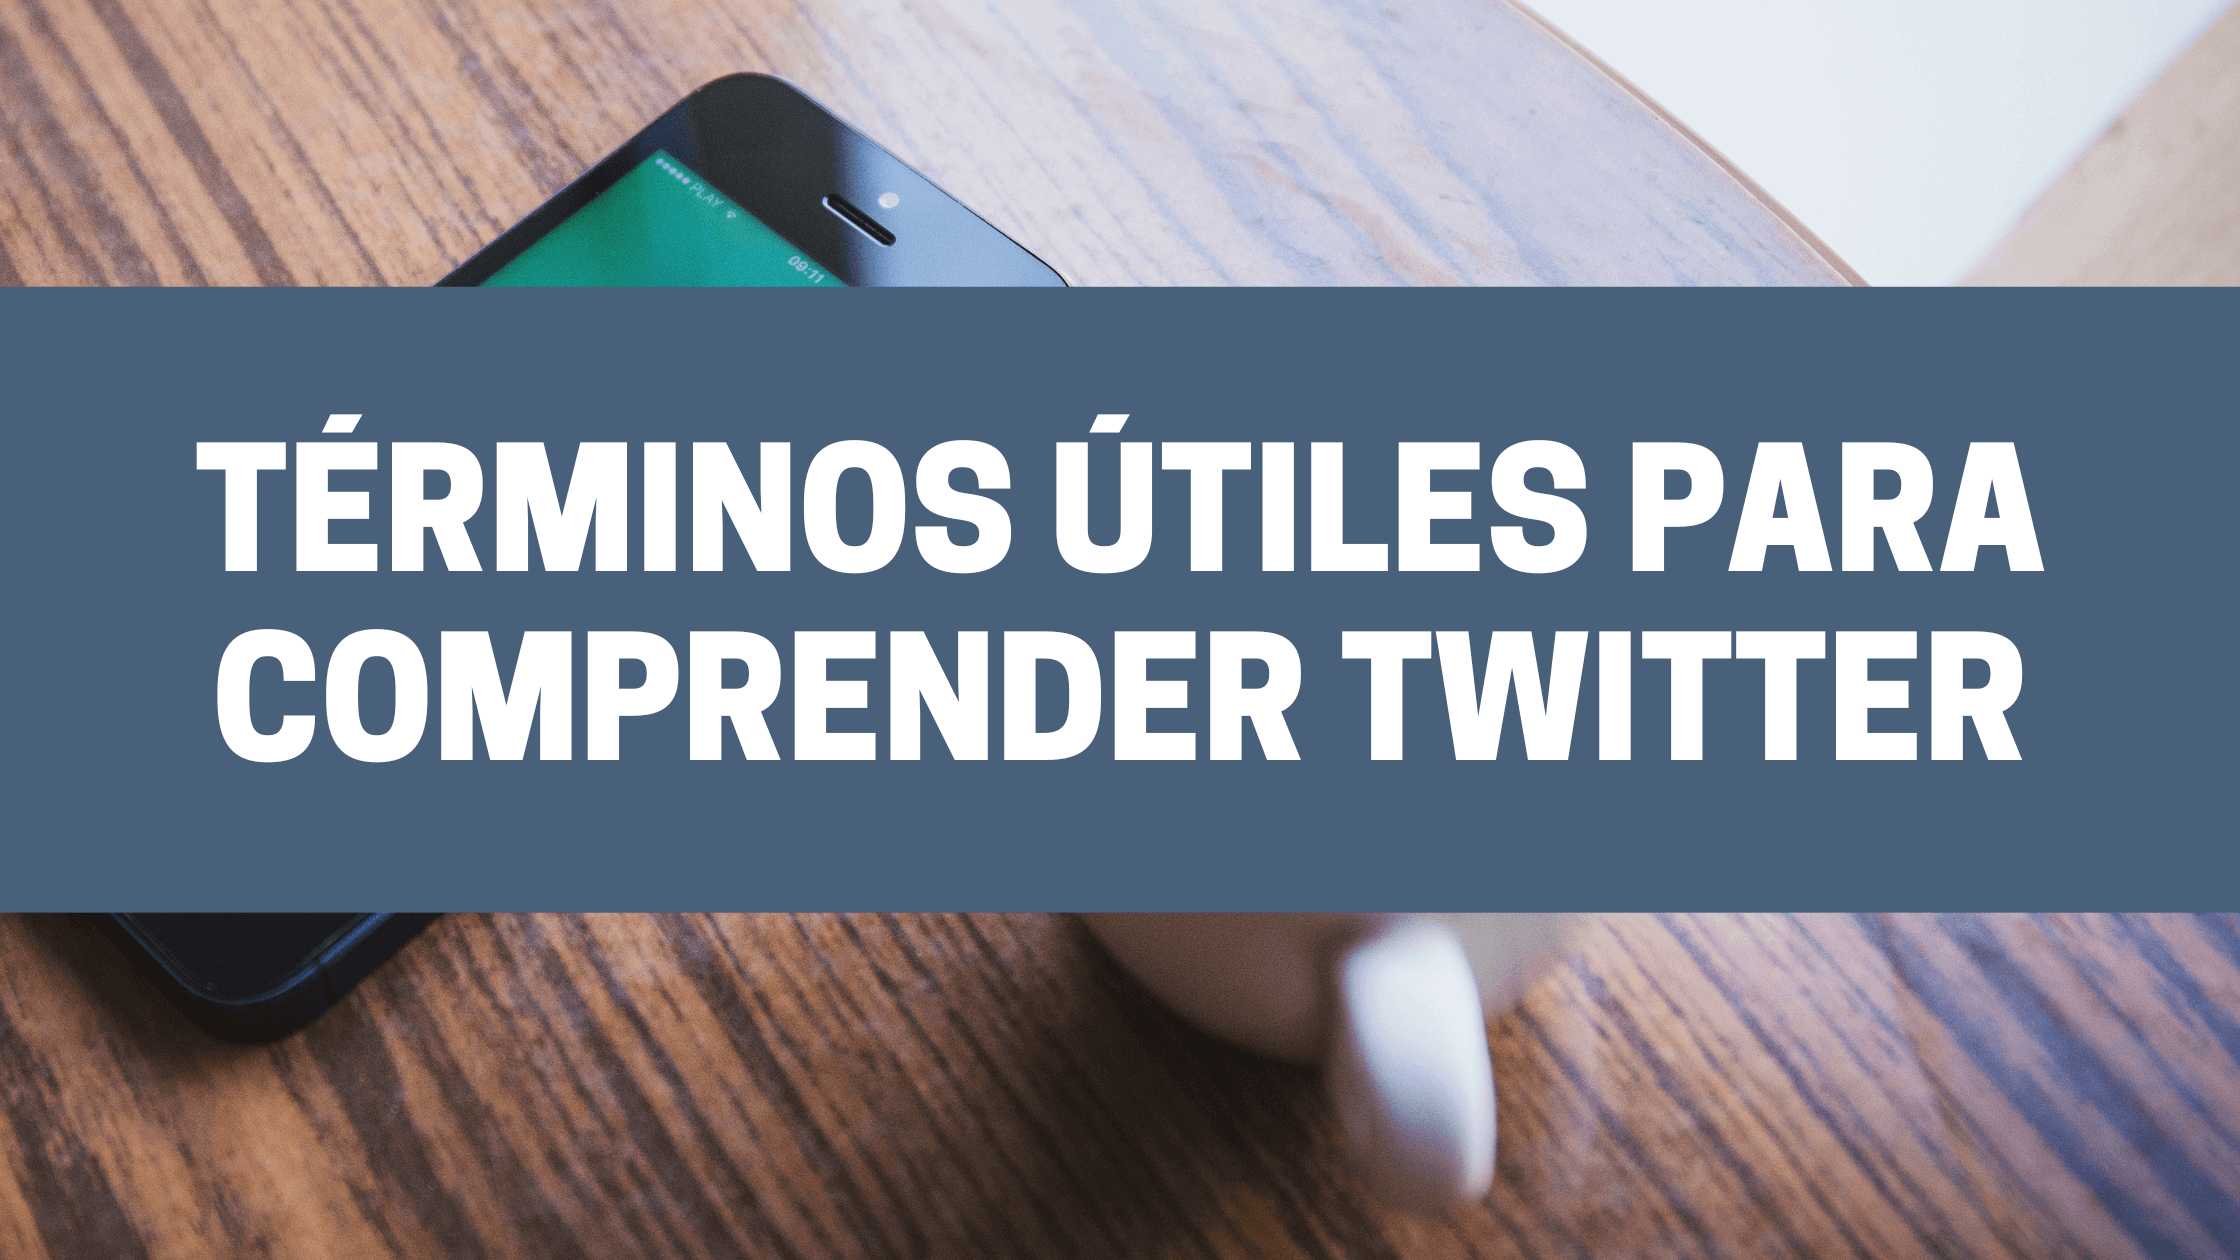 Términos y abreviaturas útiles para comprender Twitter